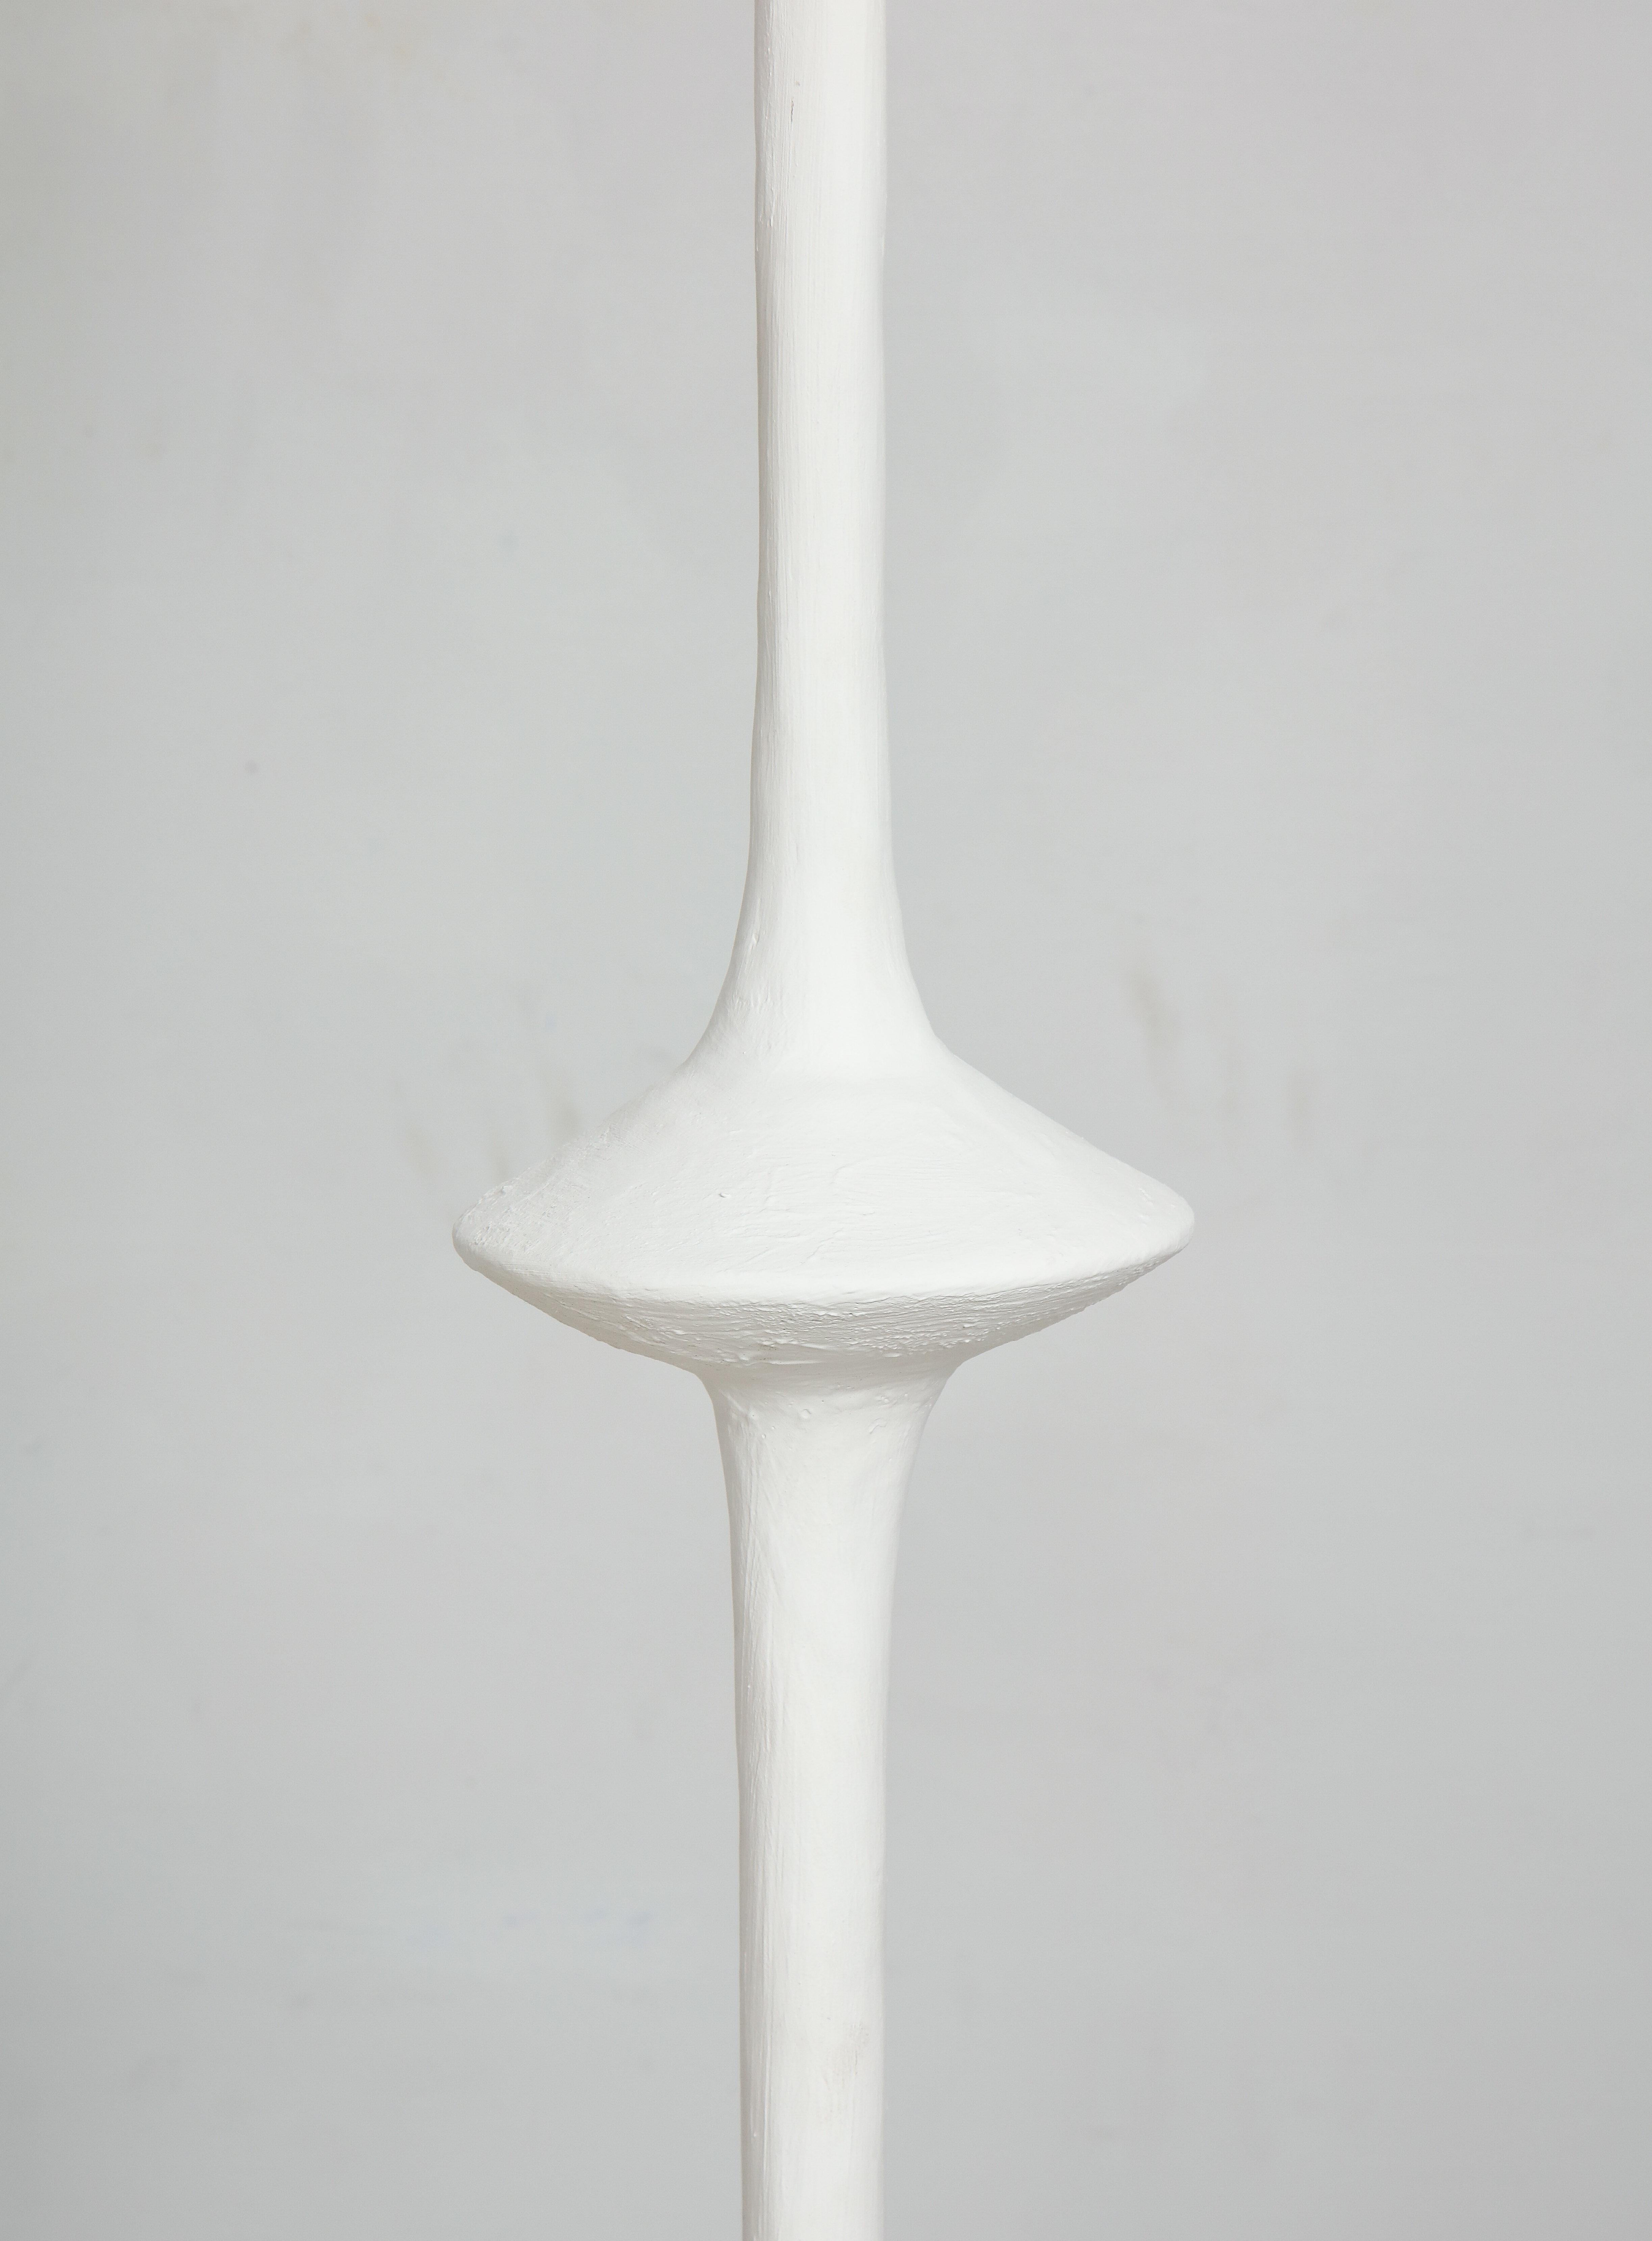 Custom Plaster Floor Lamp in the Giacometti Manner For Sale 1